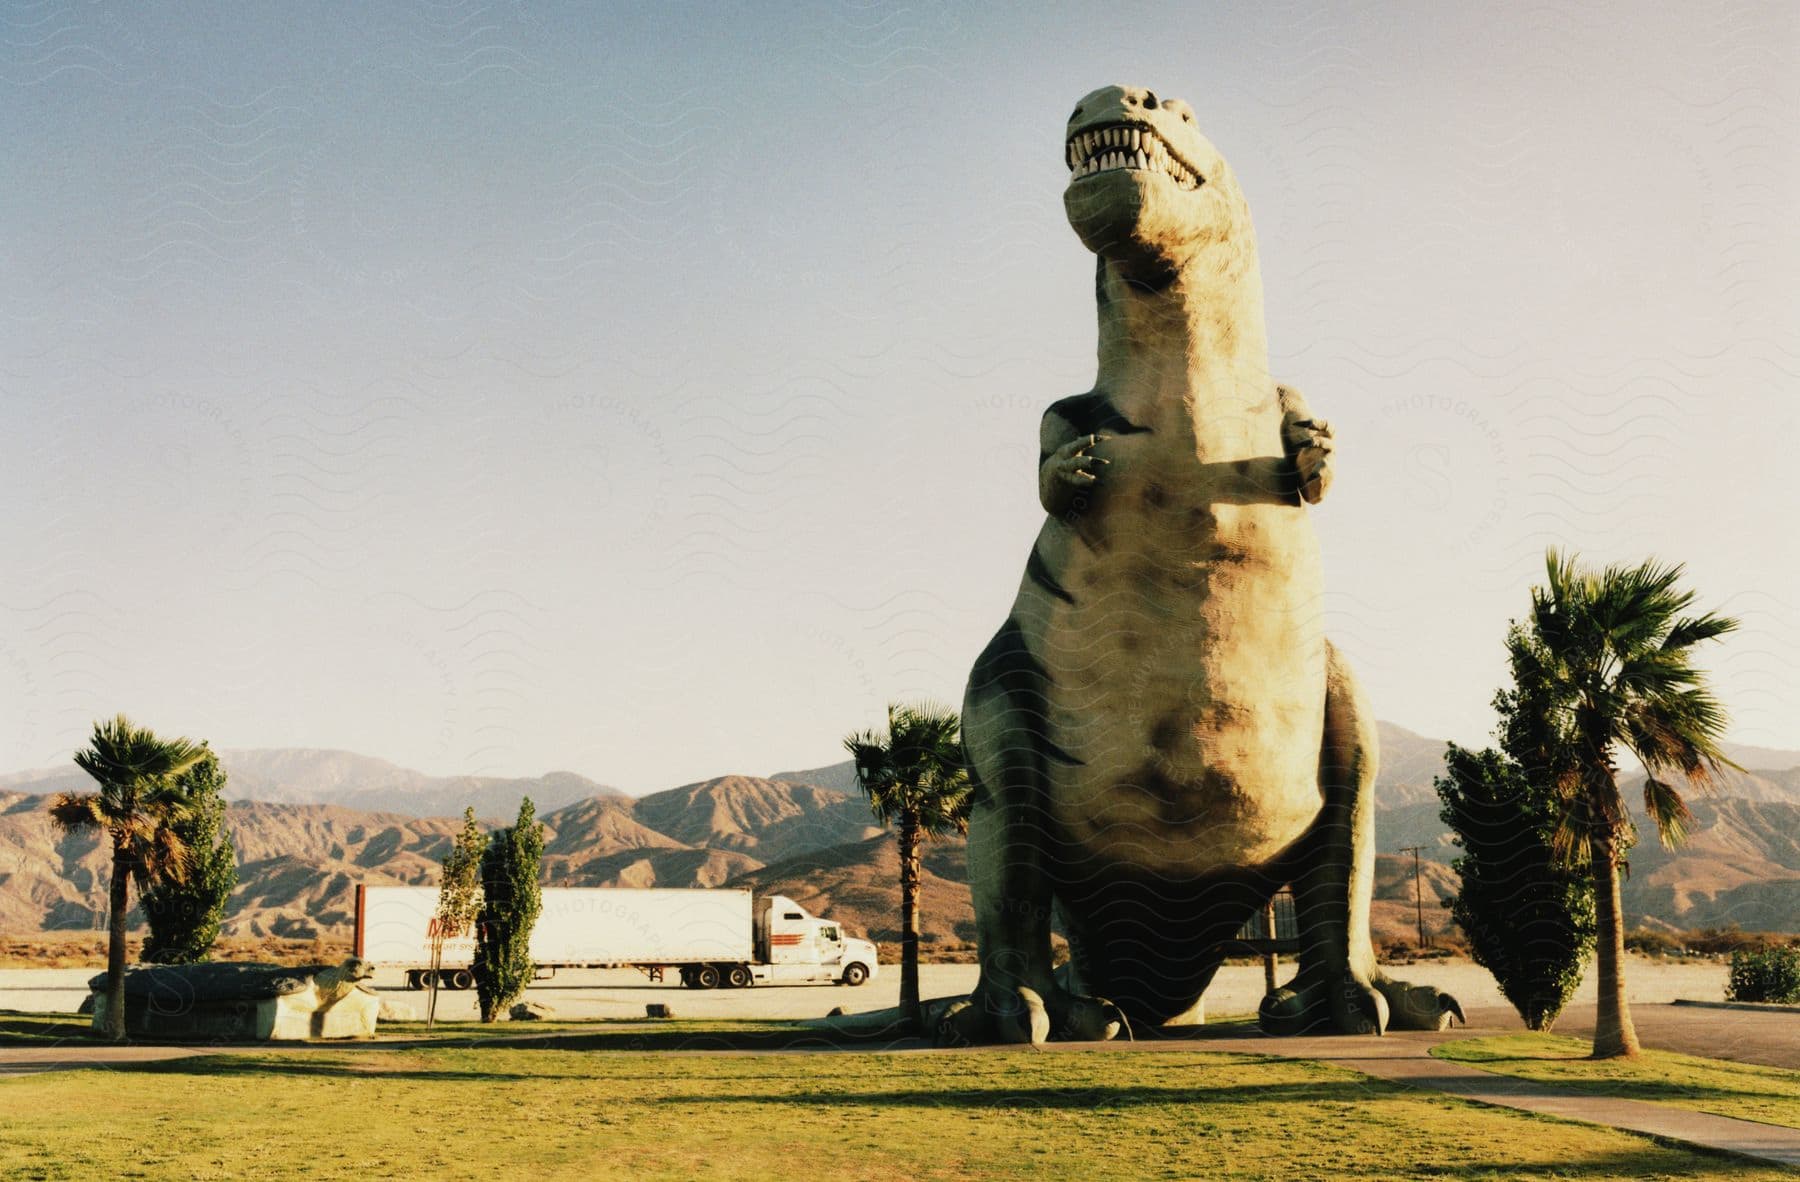 Dinosaur Roadside Attraction in Cabazon, Palm Springs Metro Area, California, USA.